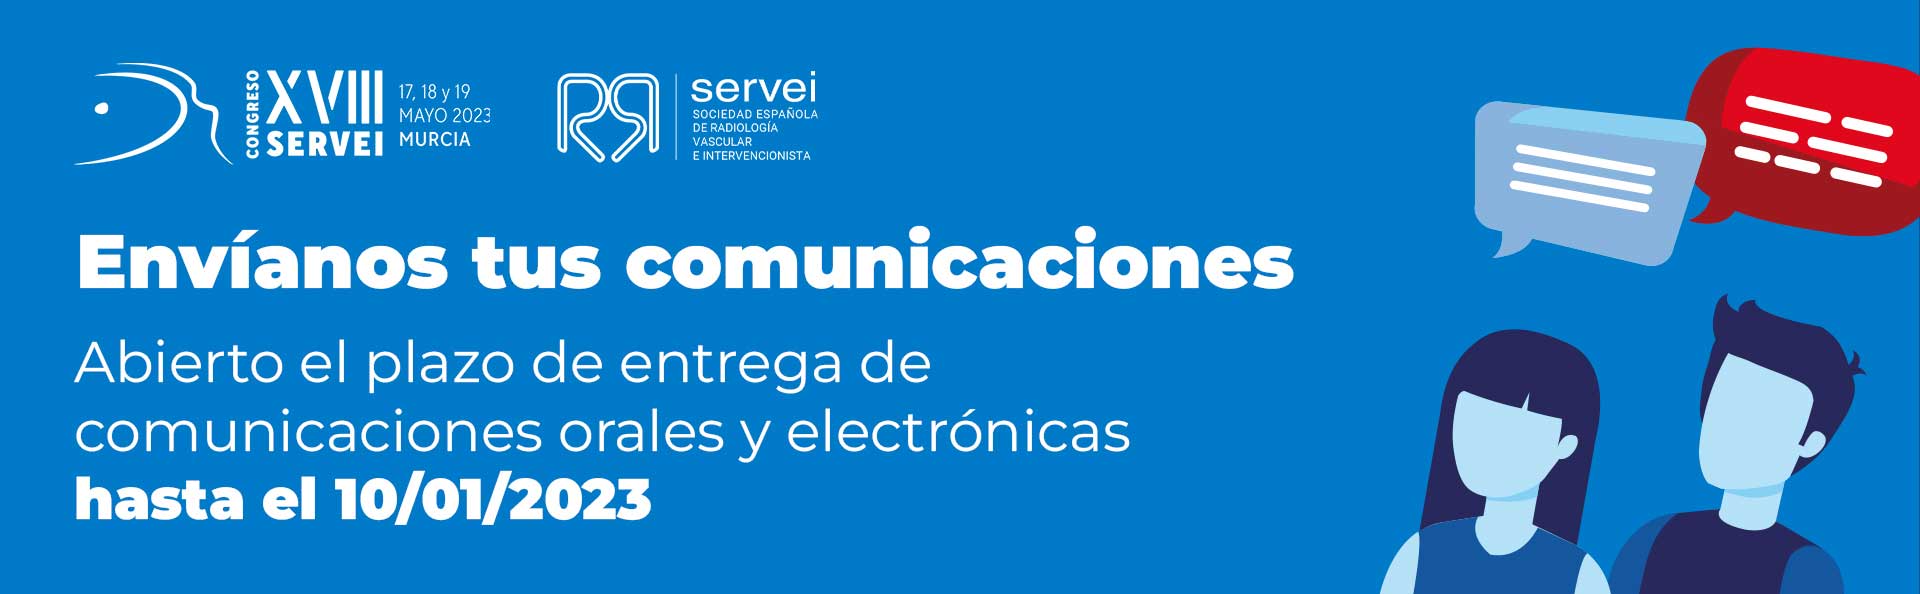 Comunicaciones SERVEI 2023